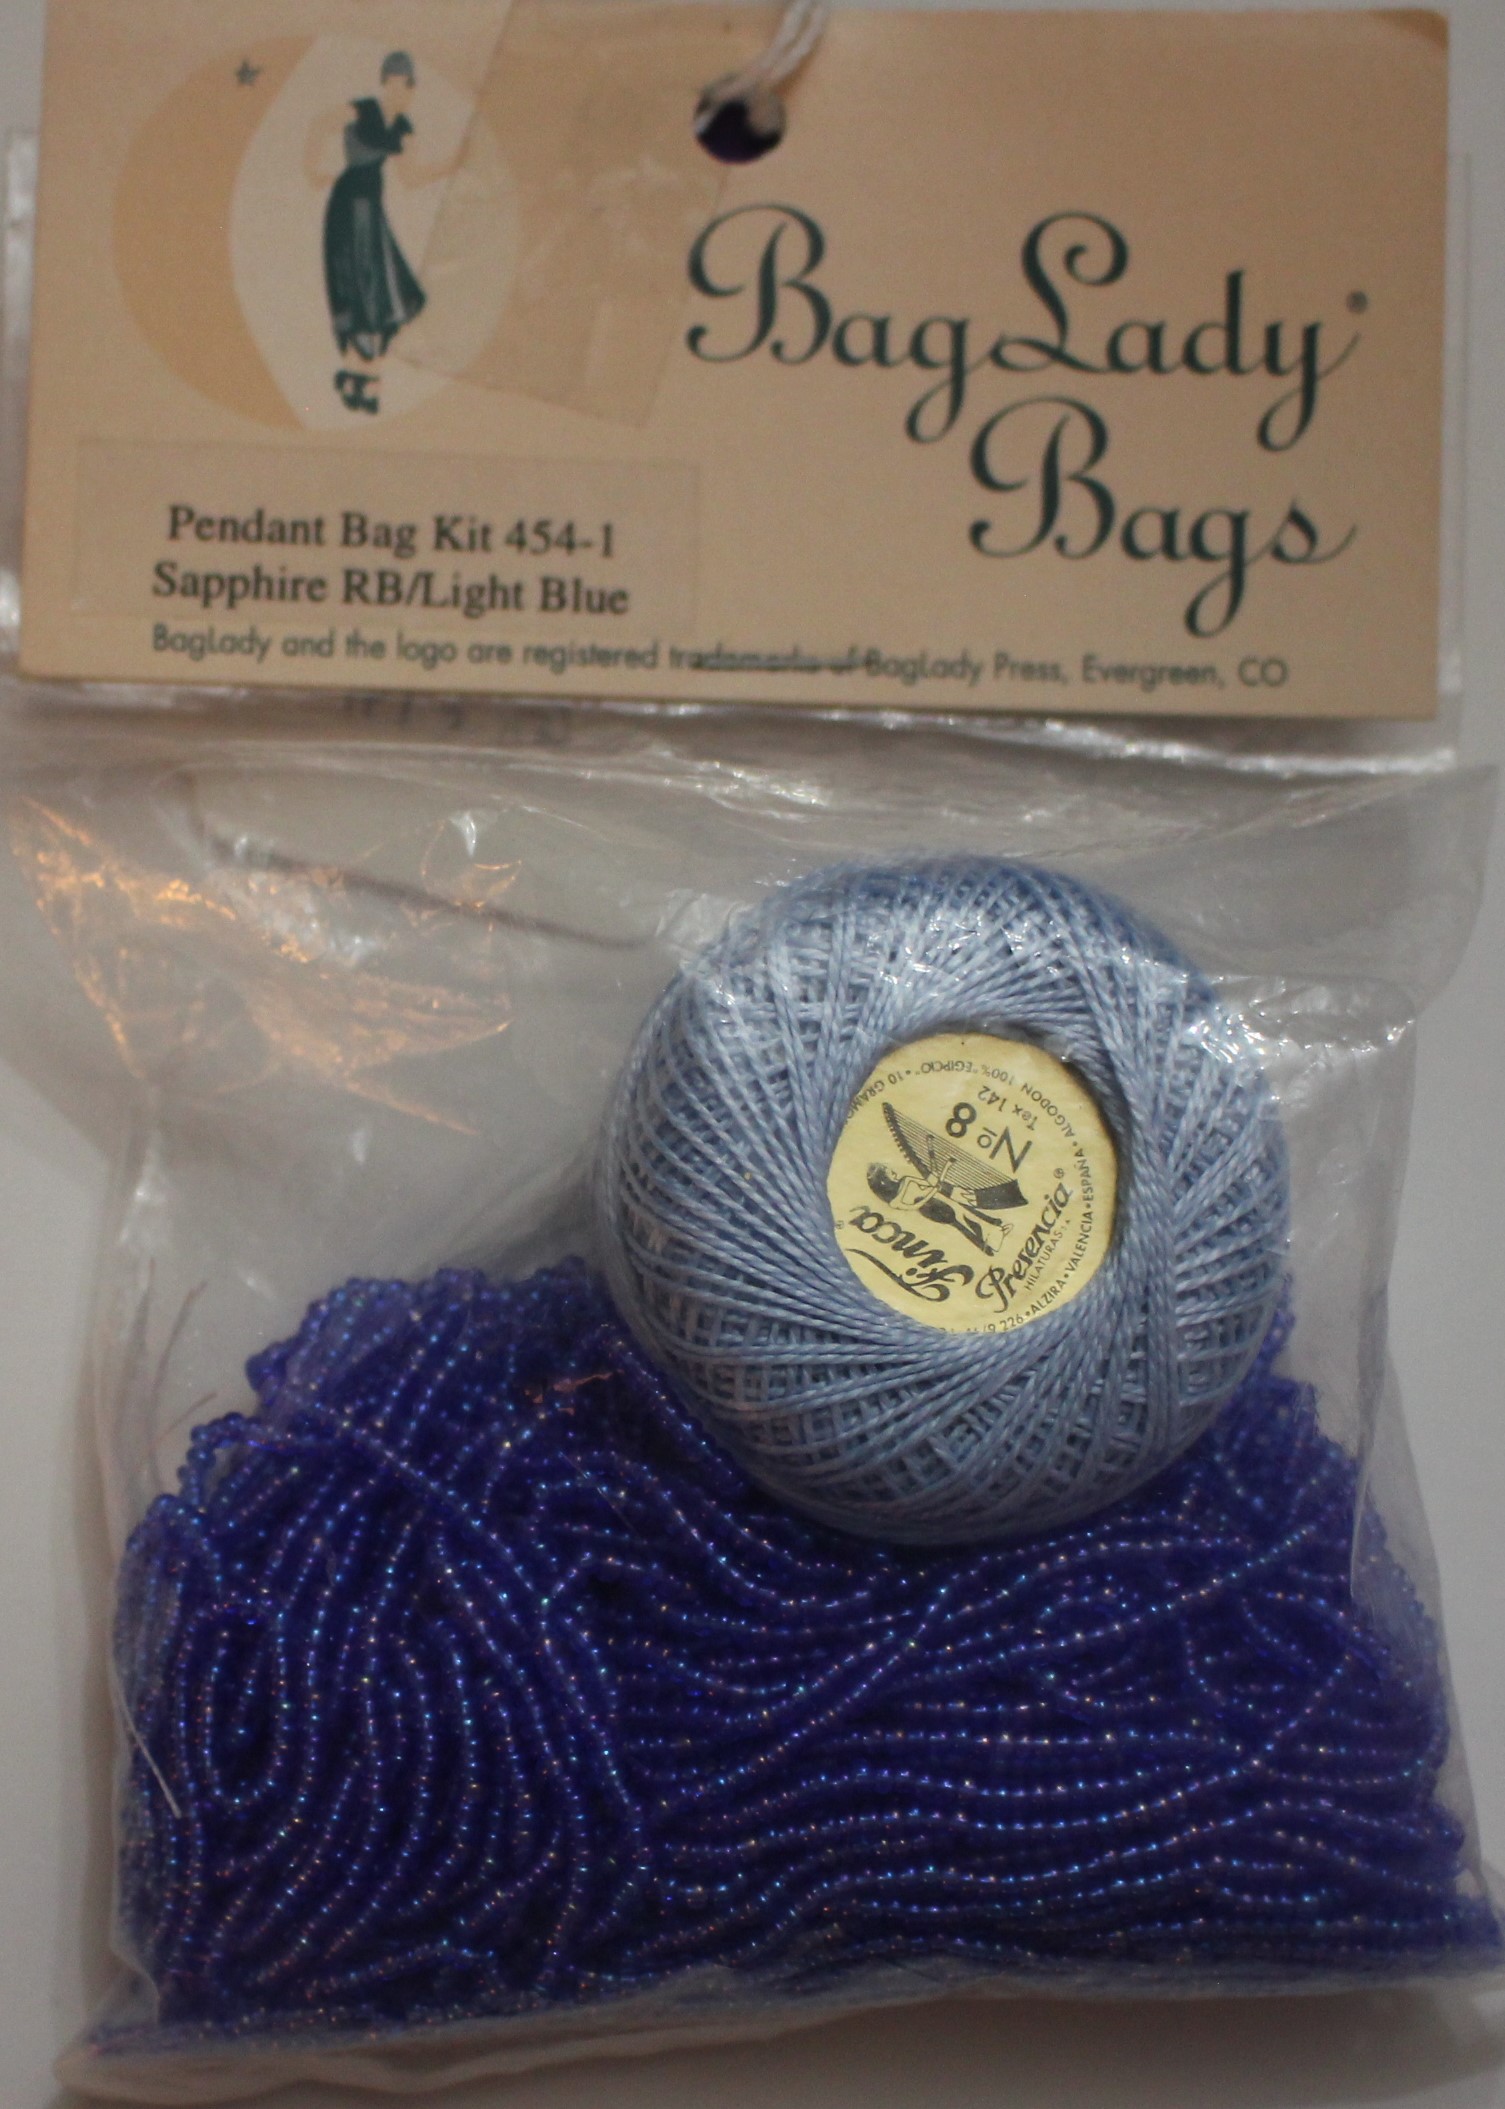 Bag Lady Bags Pendant Bag Kit 454-1 Sapphire/Lt Blue